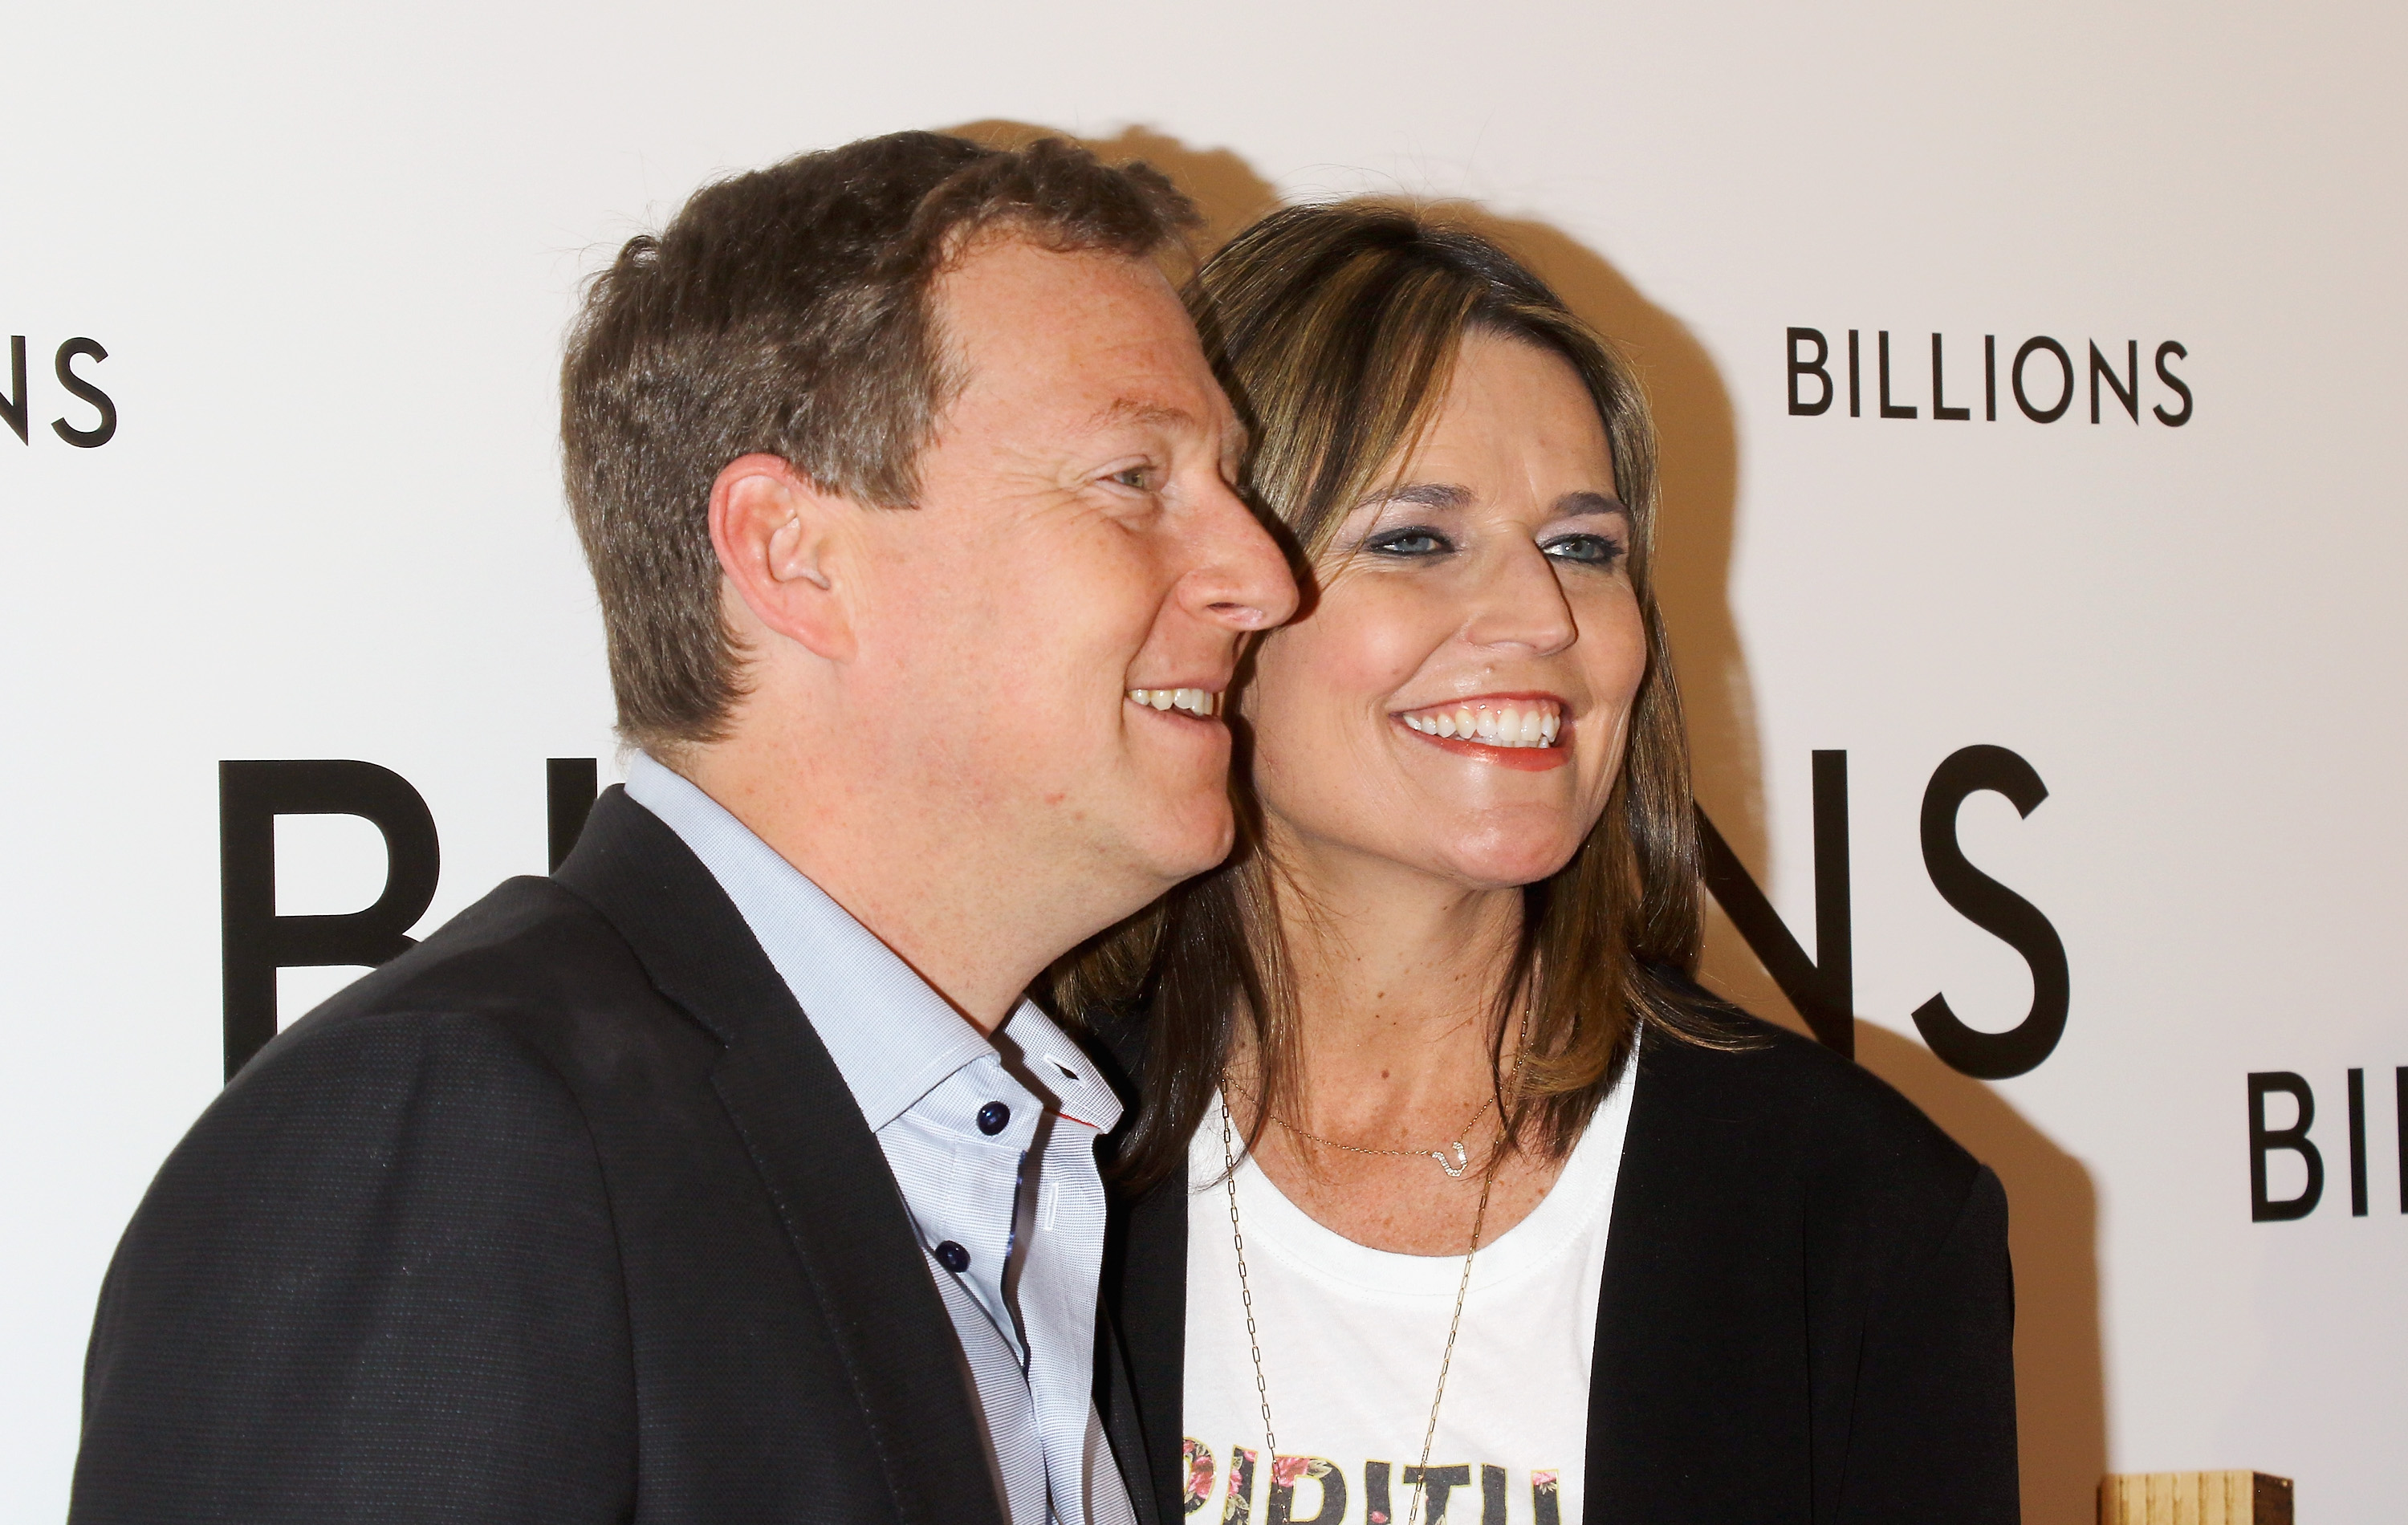 Michael Feldman and Savannah Guthrie attend the 'Billions' series premiere 